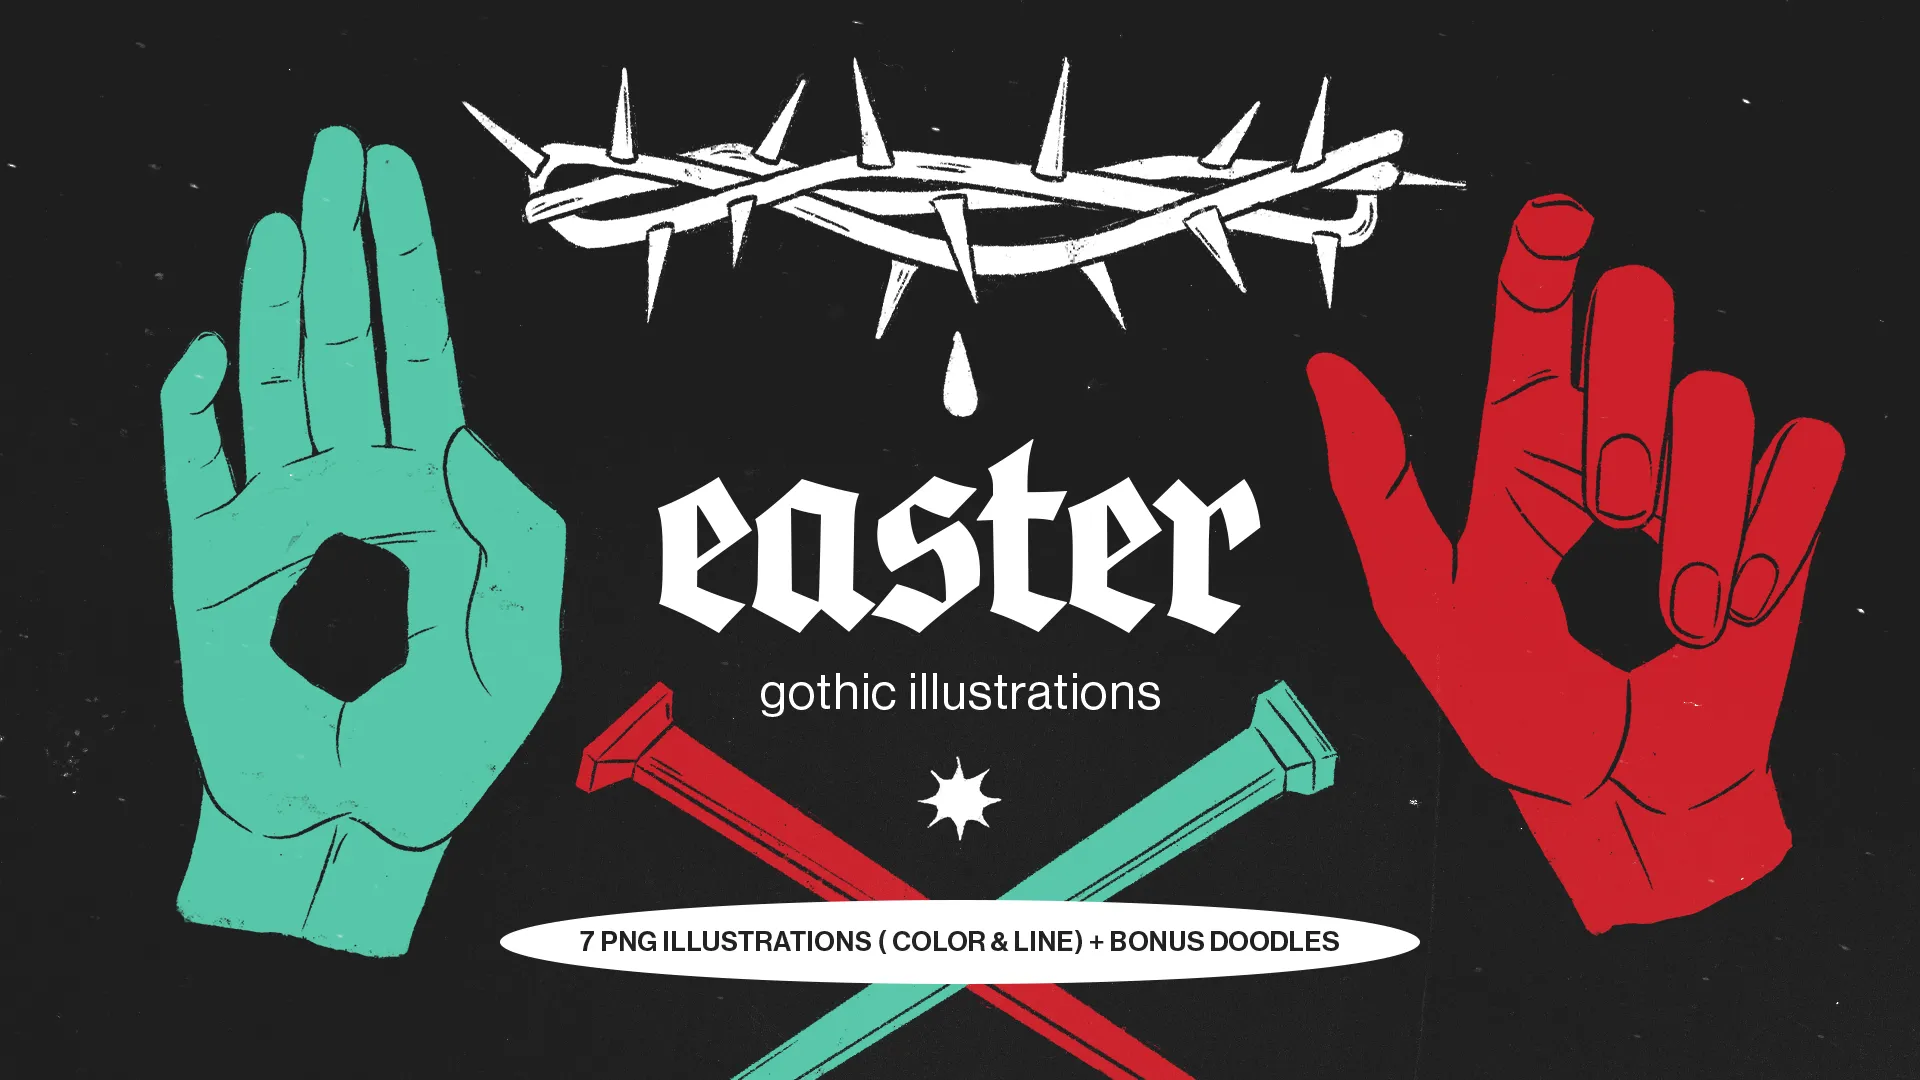 Easter Gothic Illustrations | Church Media | Design Resources | Design Elements